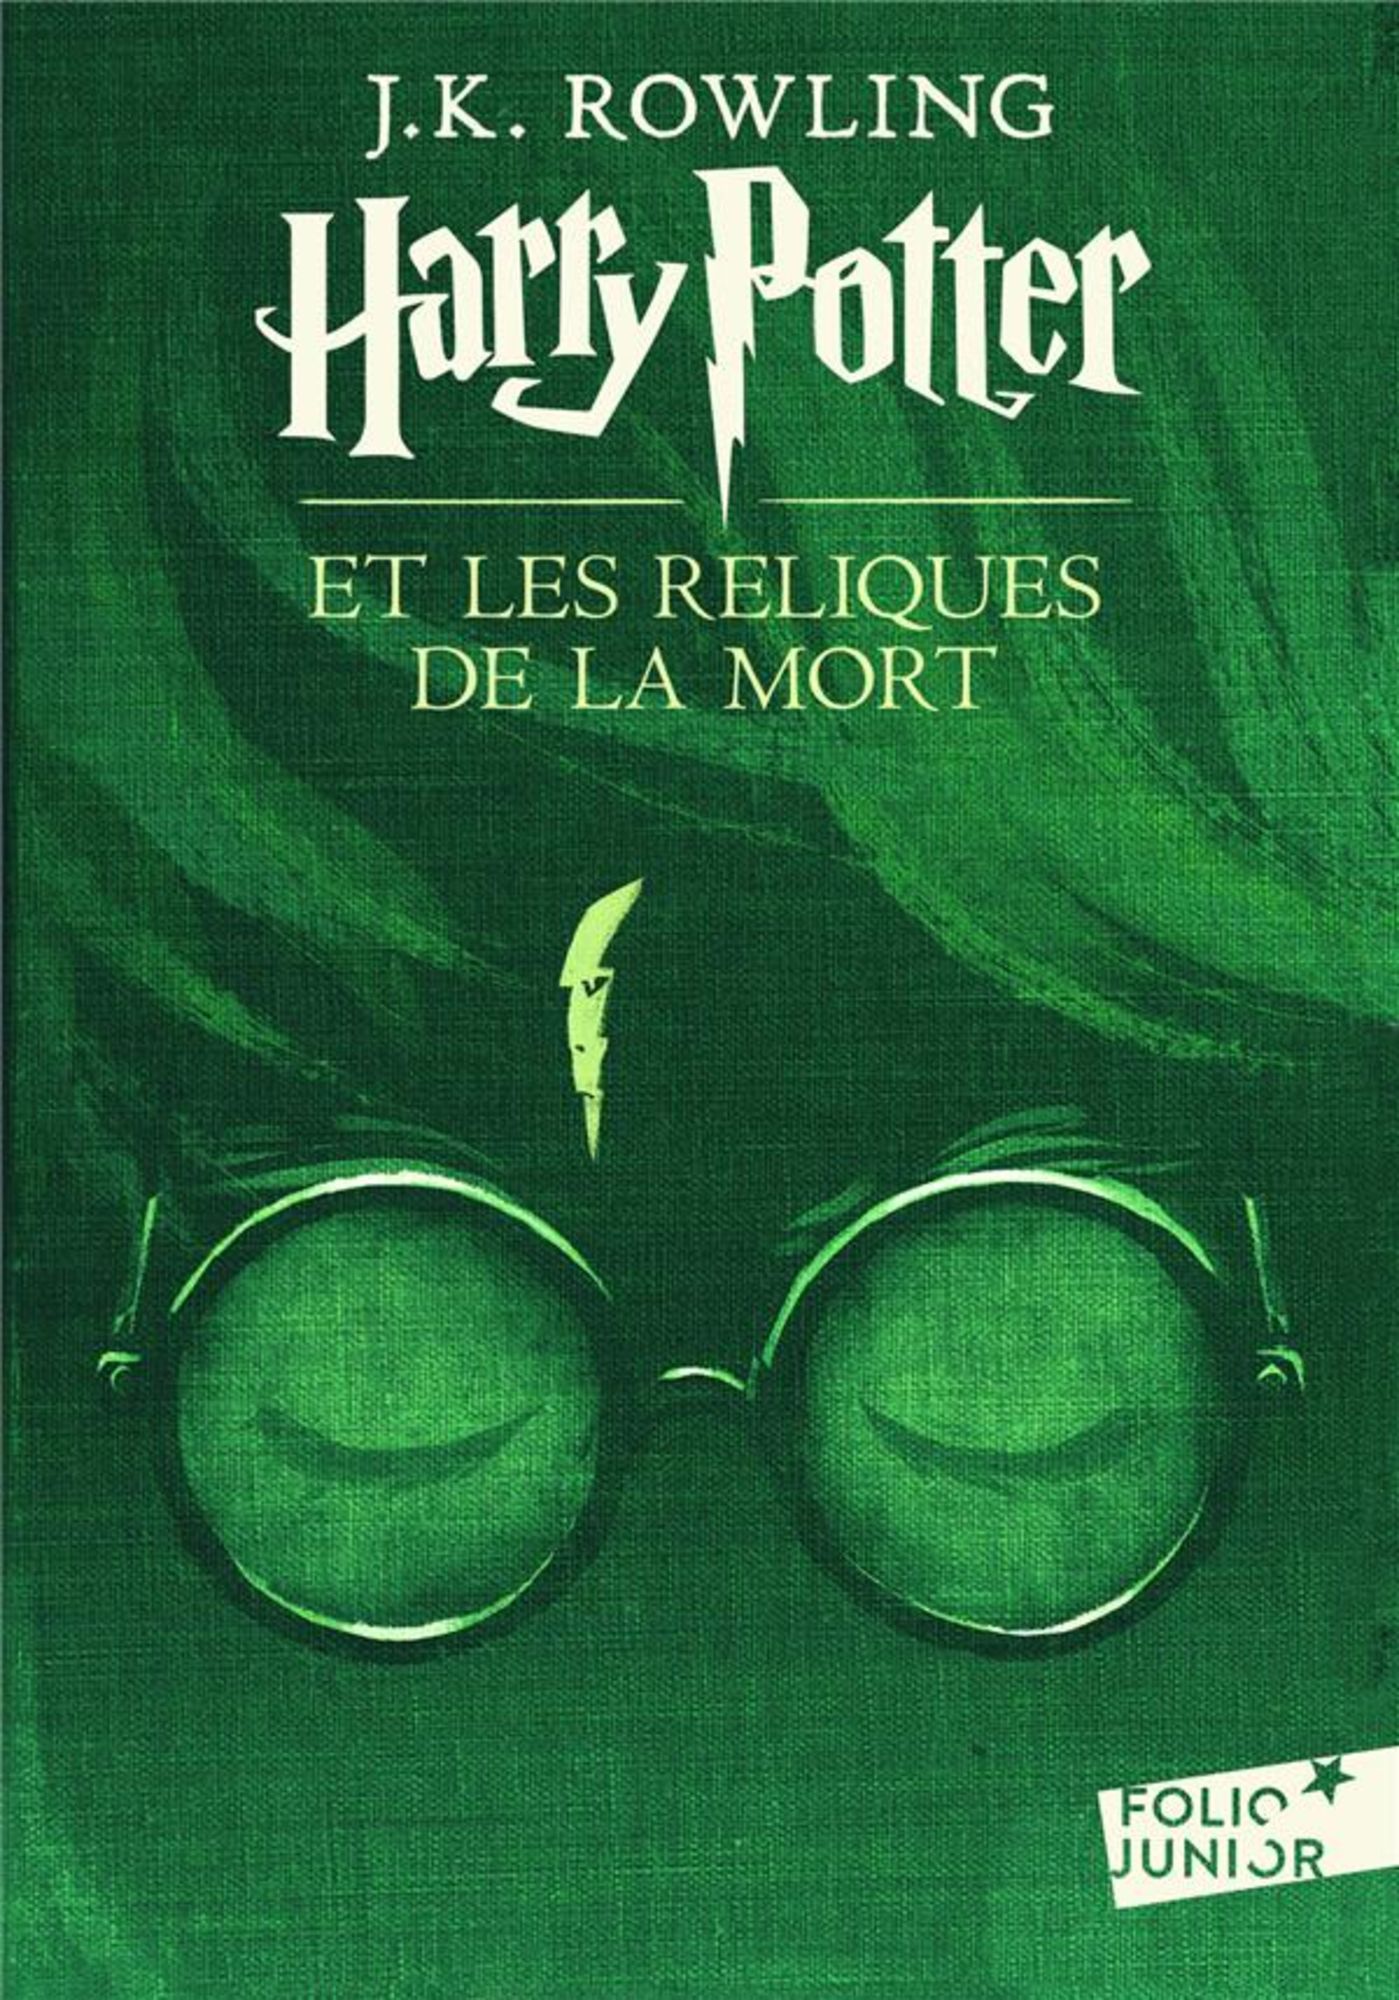 Harry Potter et la coupe de feu by Joanne K Rowling - Paperback